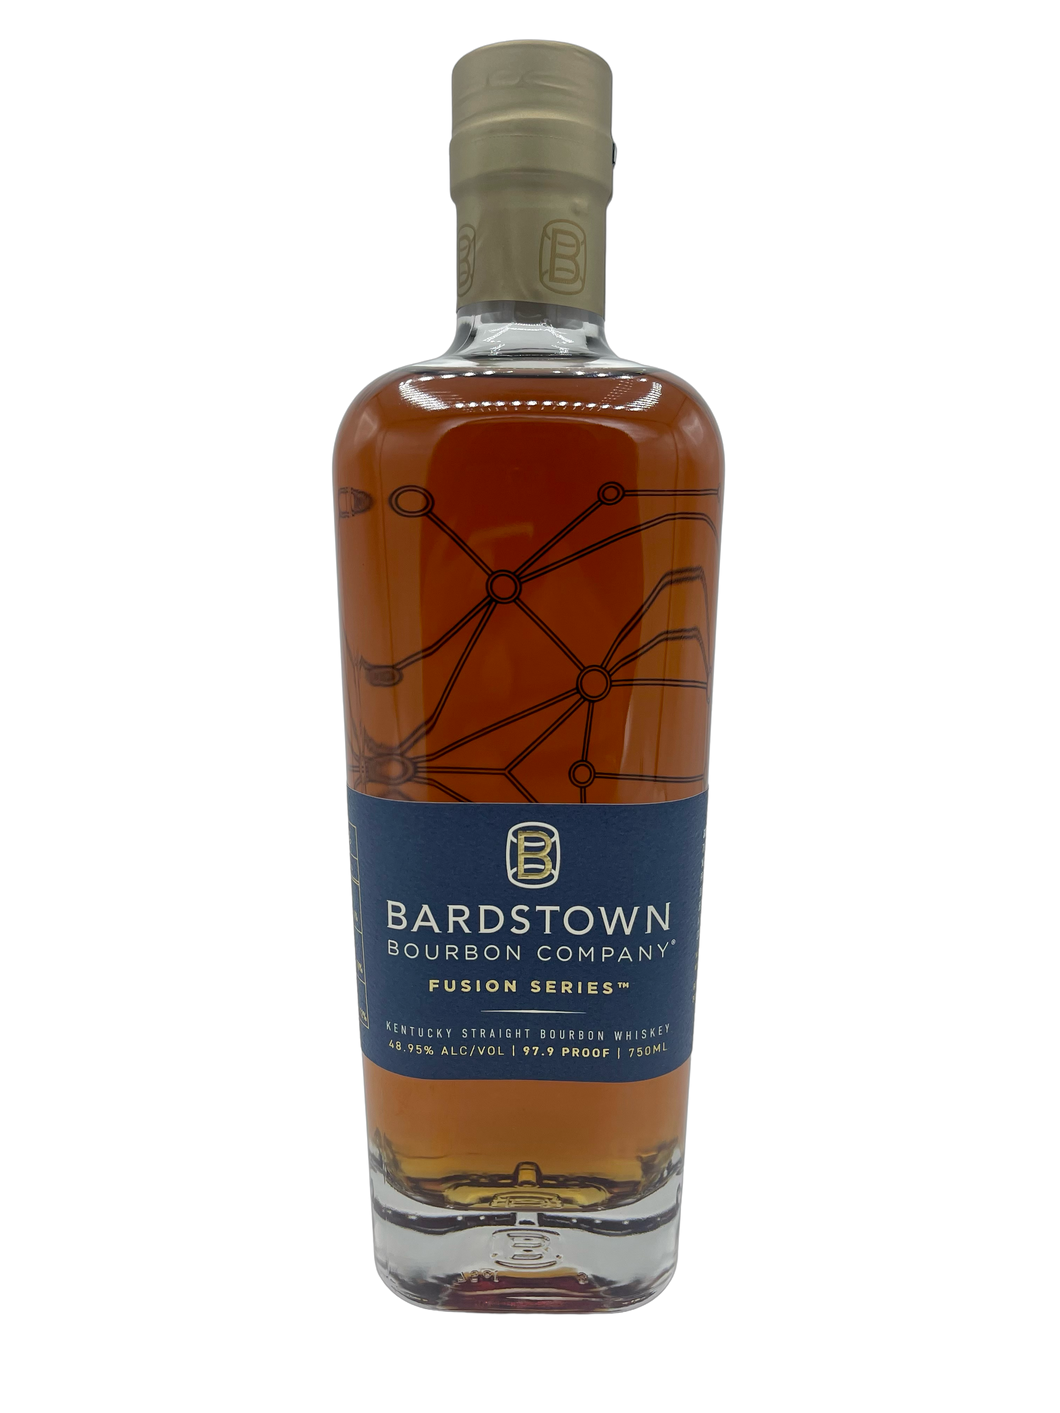 Bardstown Bourbon Company Fusion #7 Bourbon